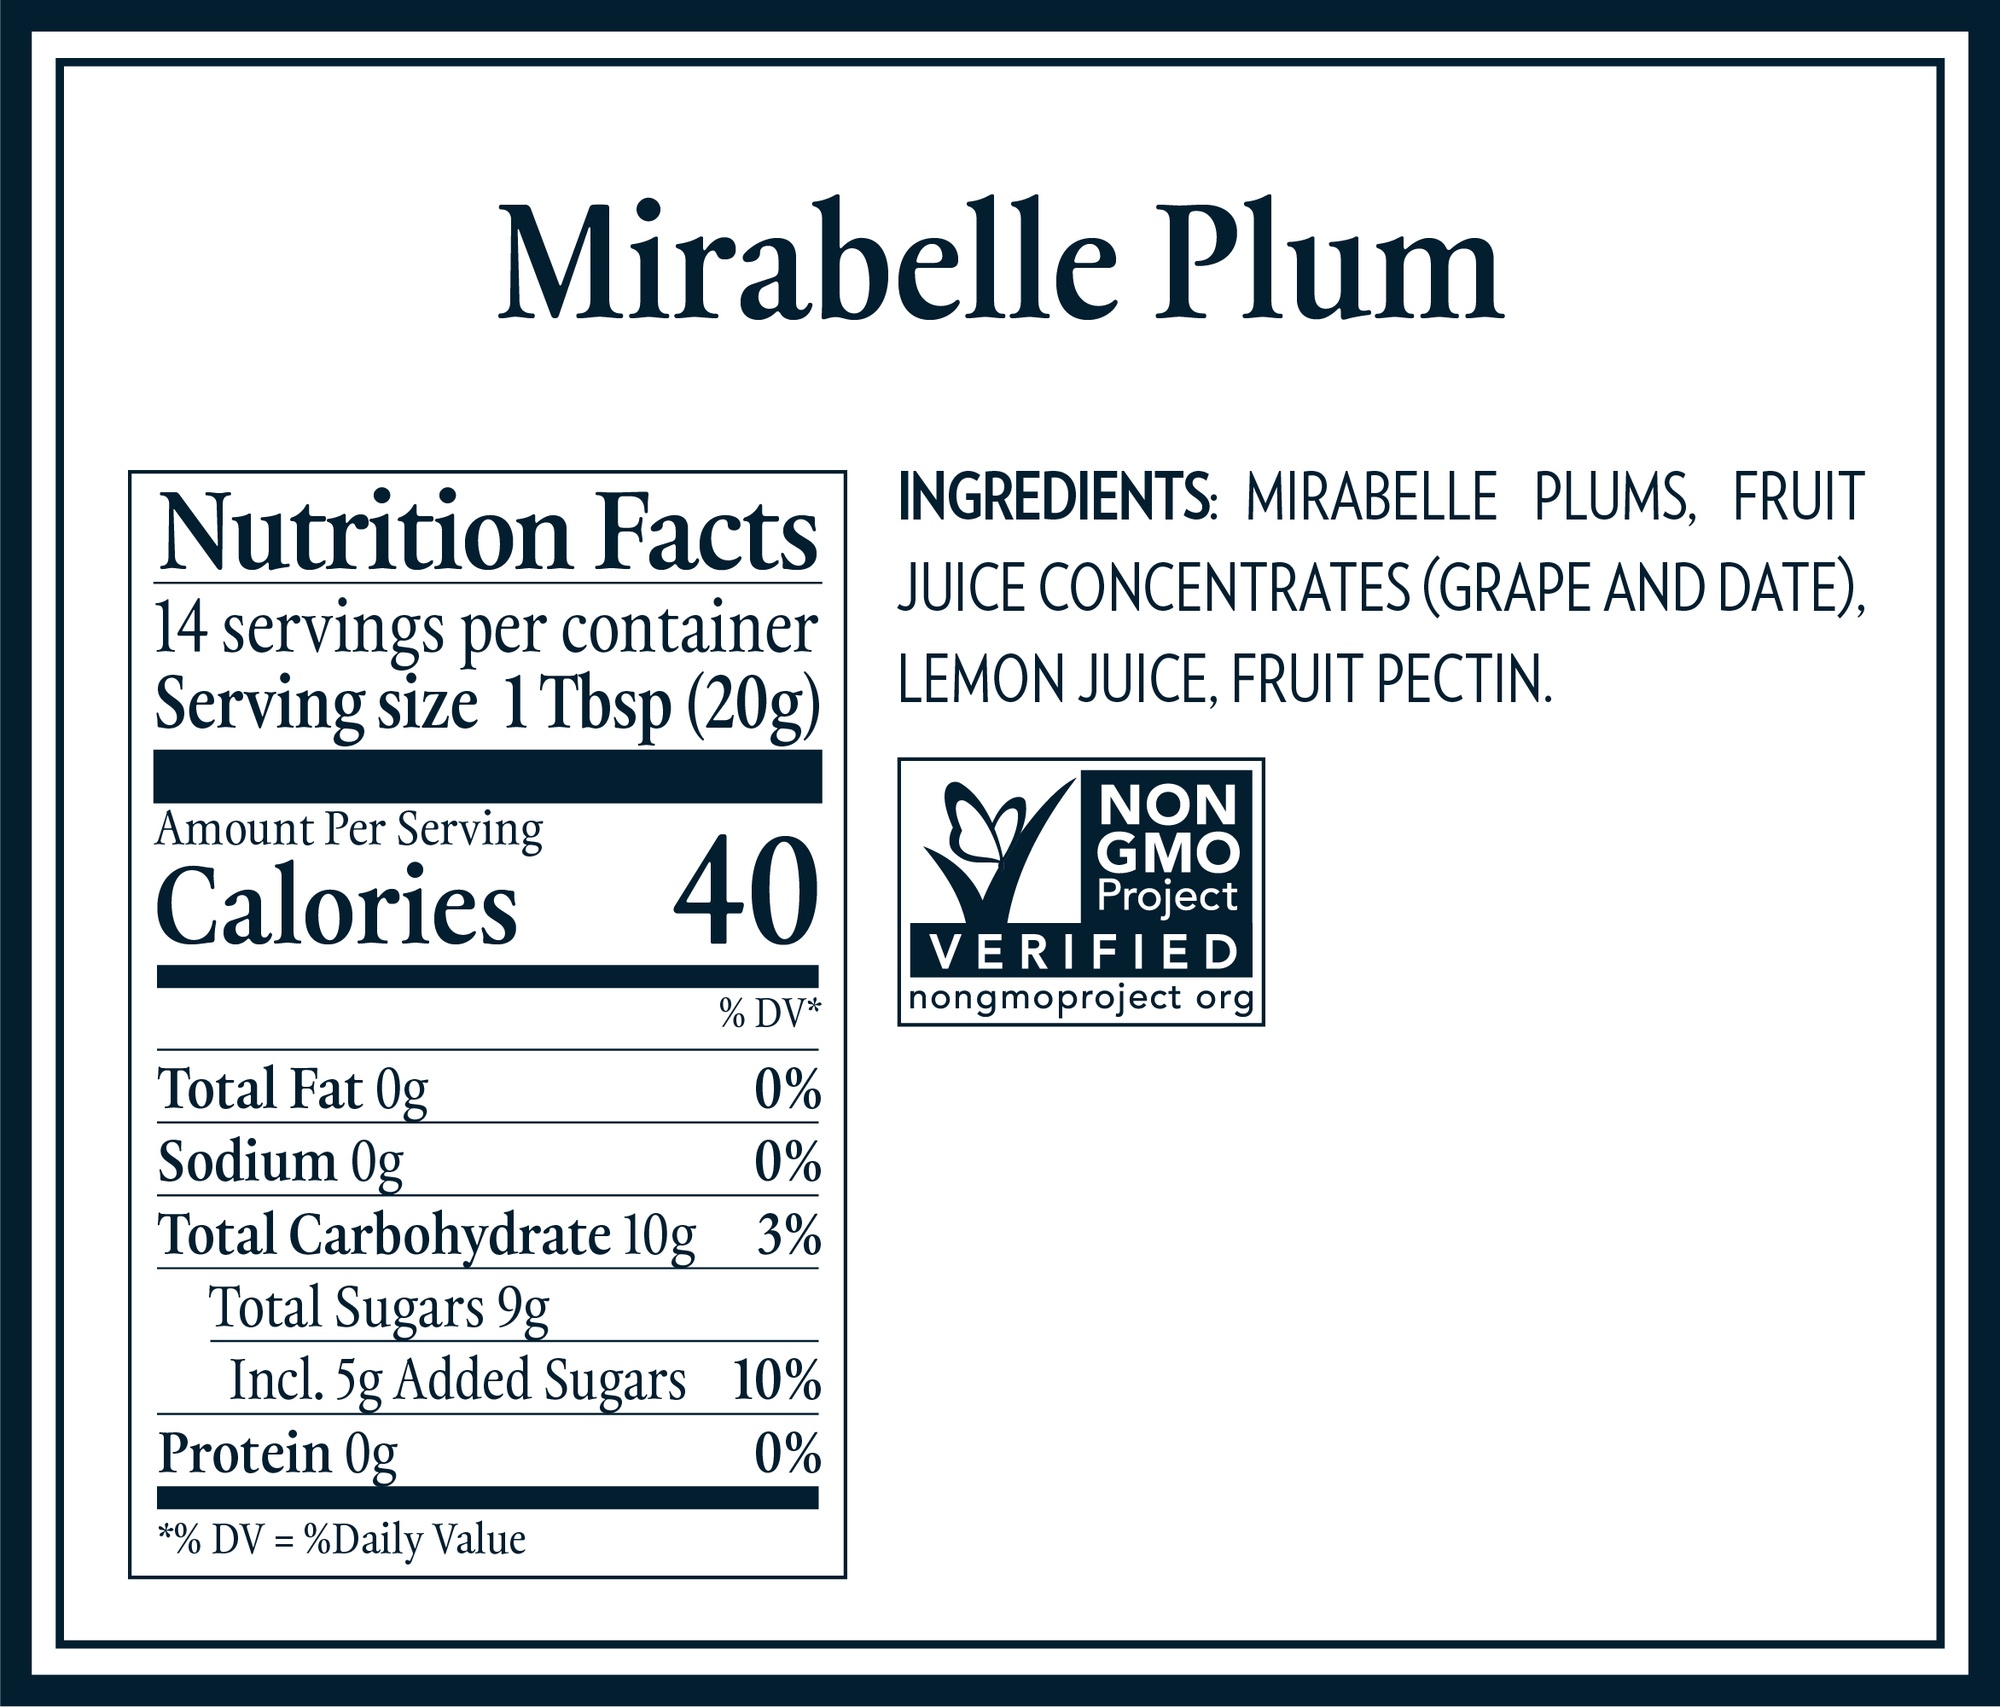 Nutrition Tables & Ingredients 2_mirabelle plum-1